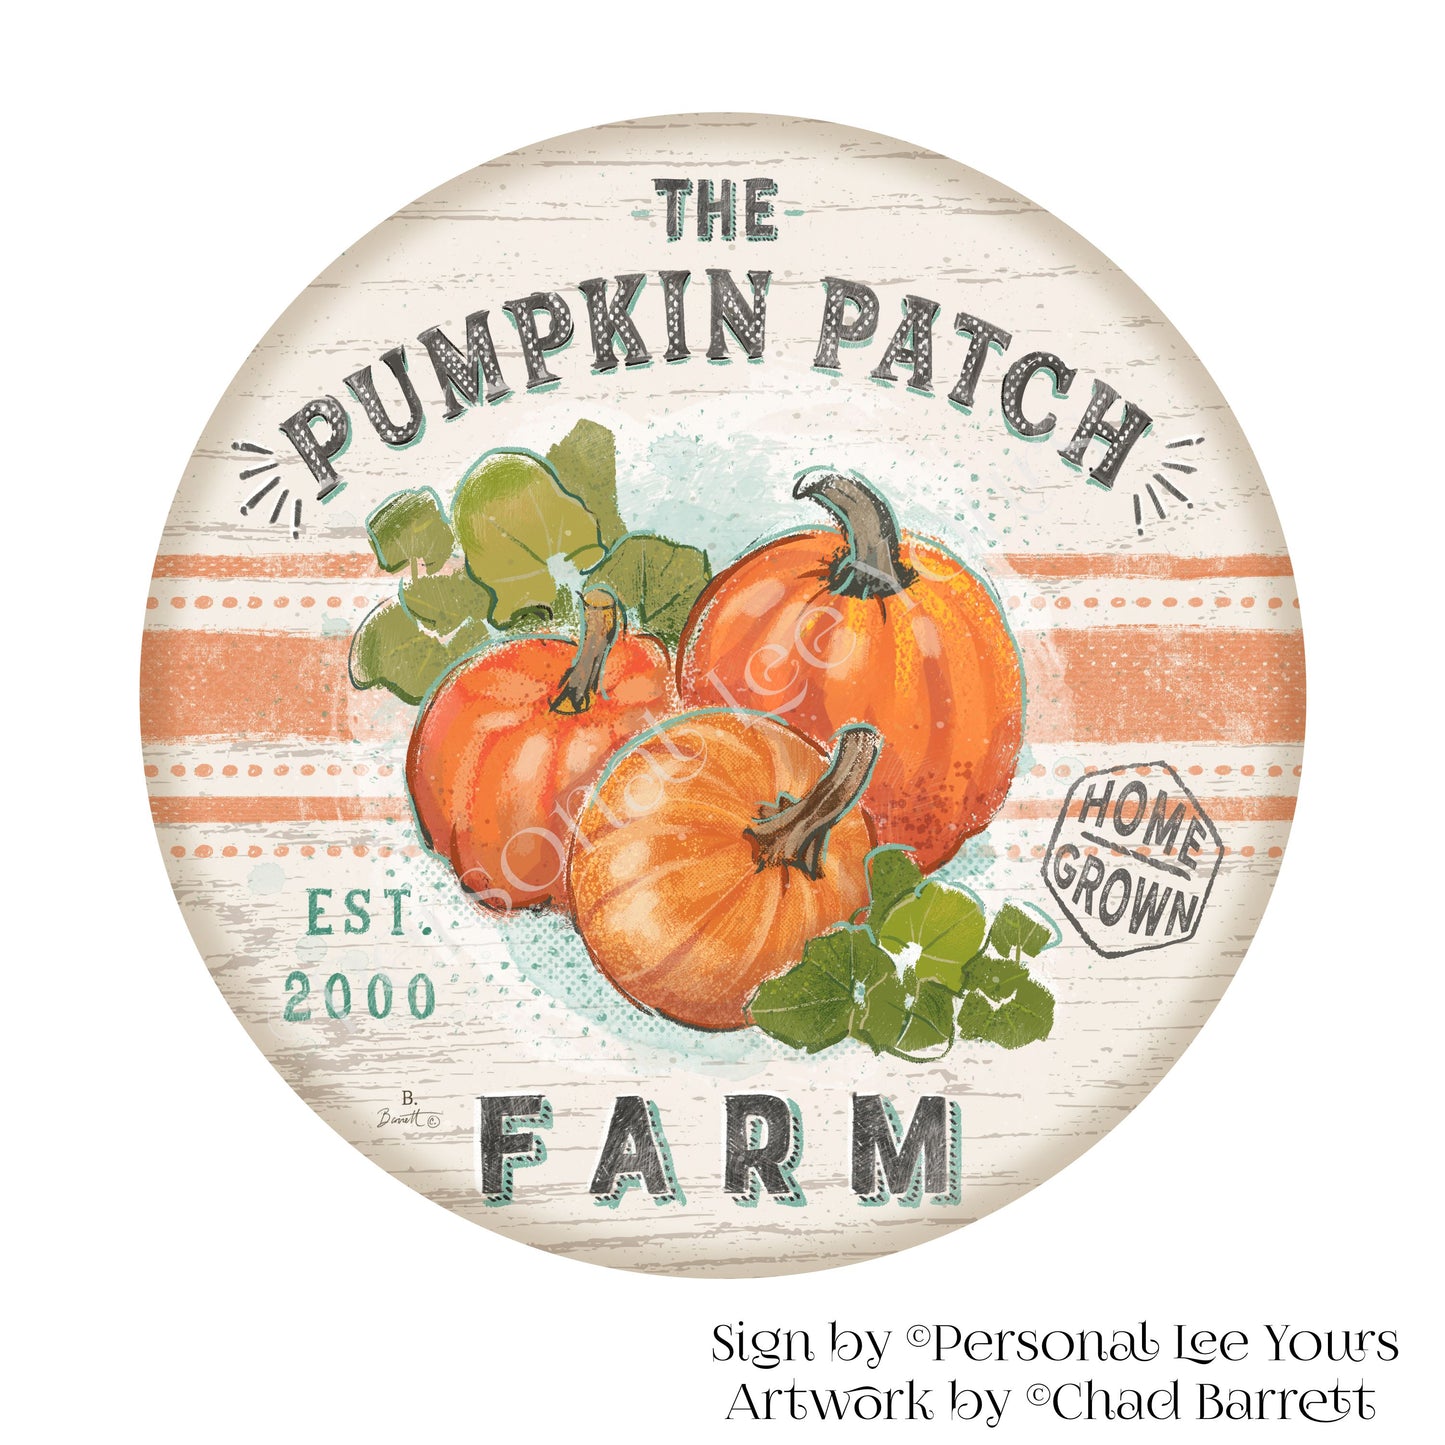 Chad Barrett Exclusive Sign * The Pumpkin Patch Farm * Round * Lightweight Metal